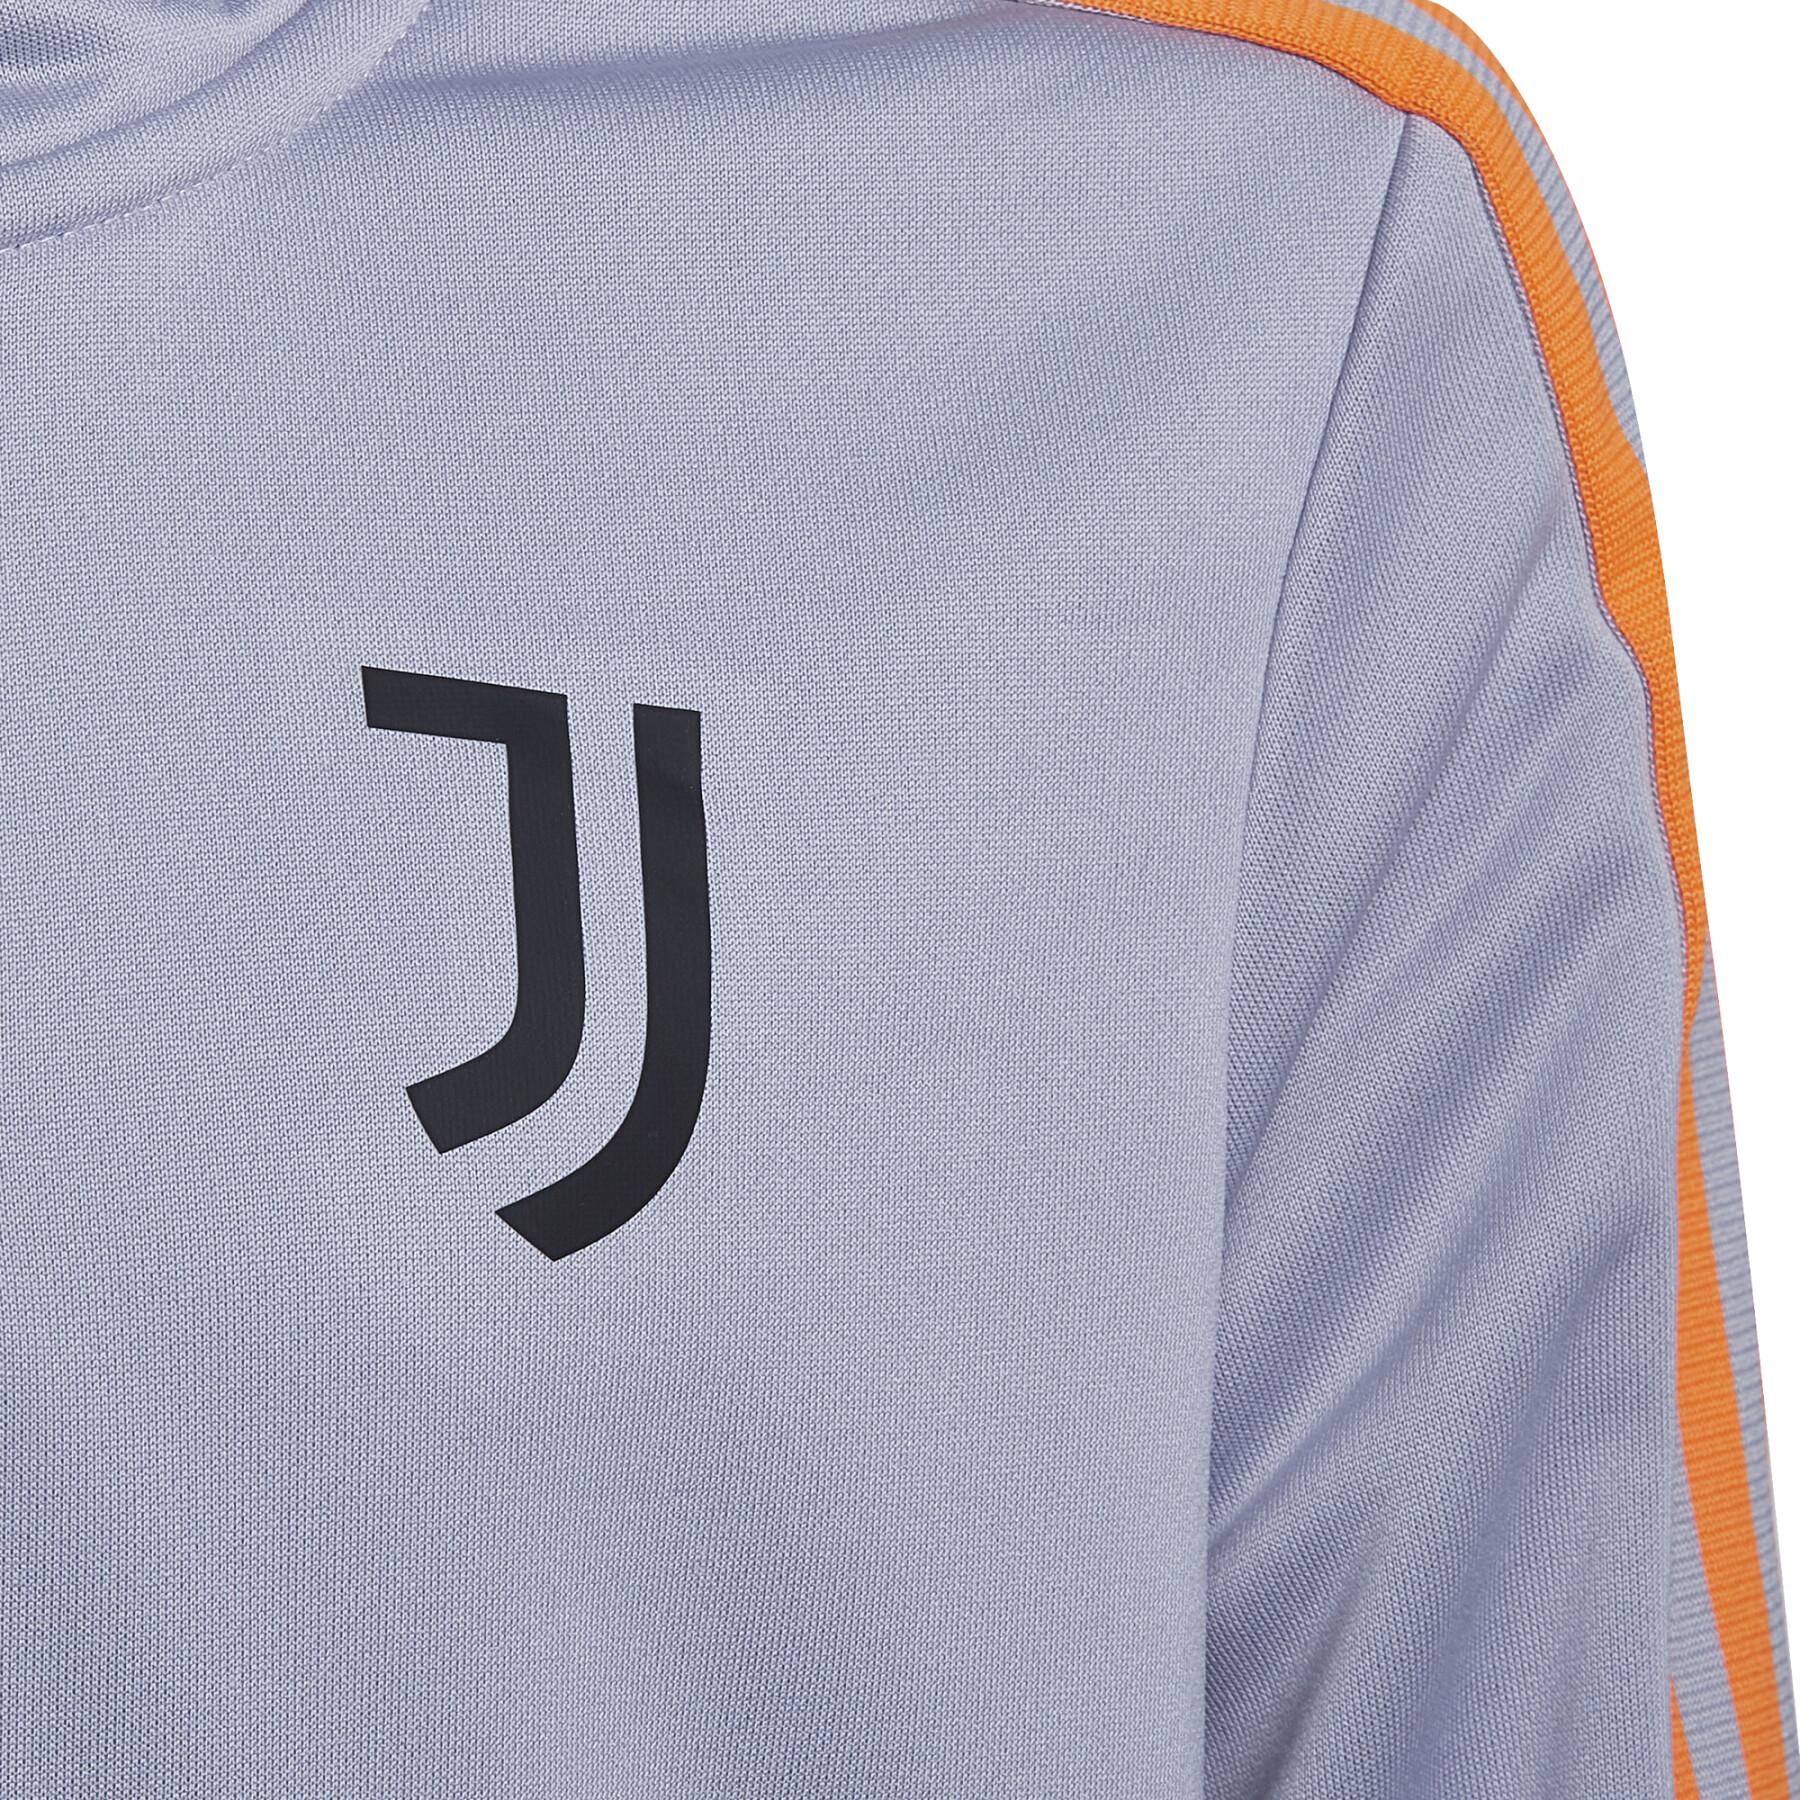 Dziecięca bluza dresowa adidas Juventus Turin 21/22